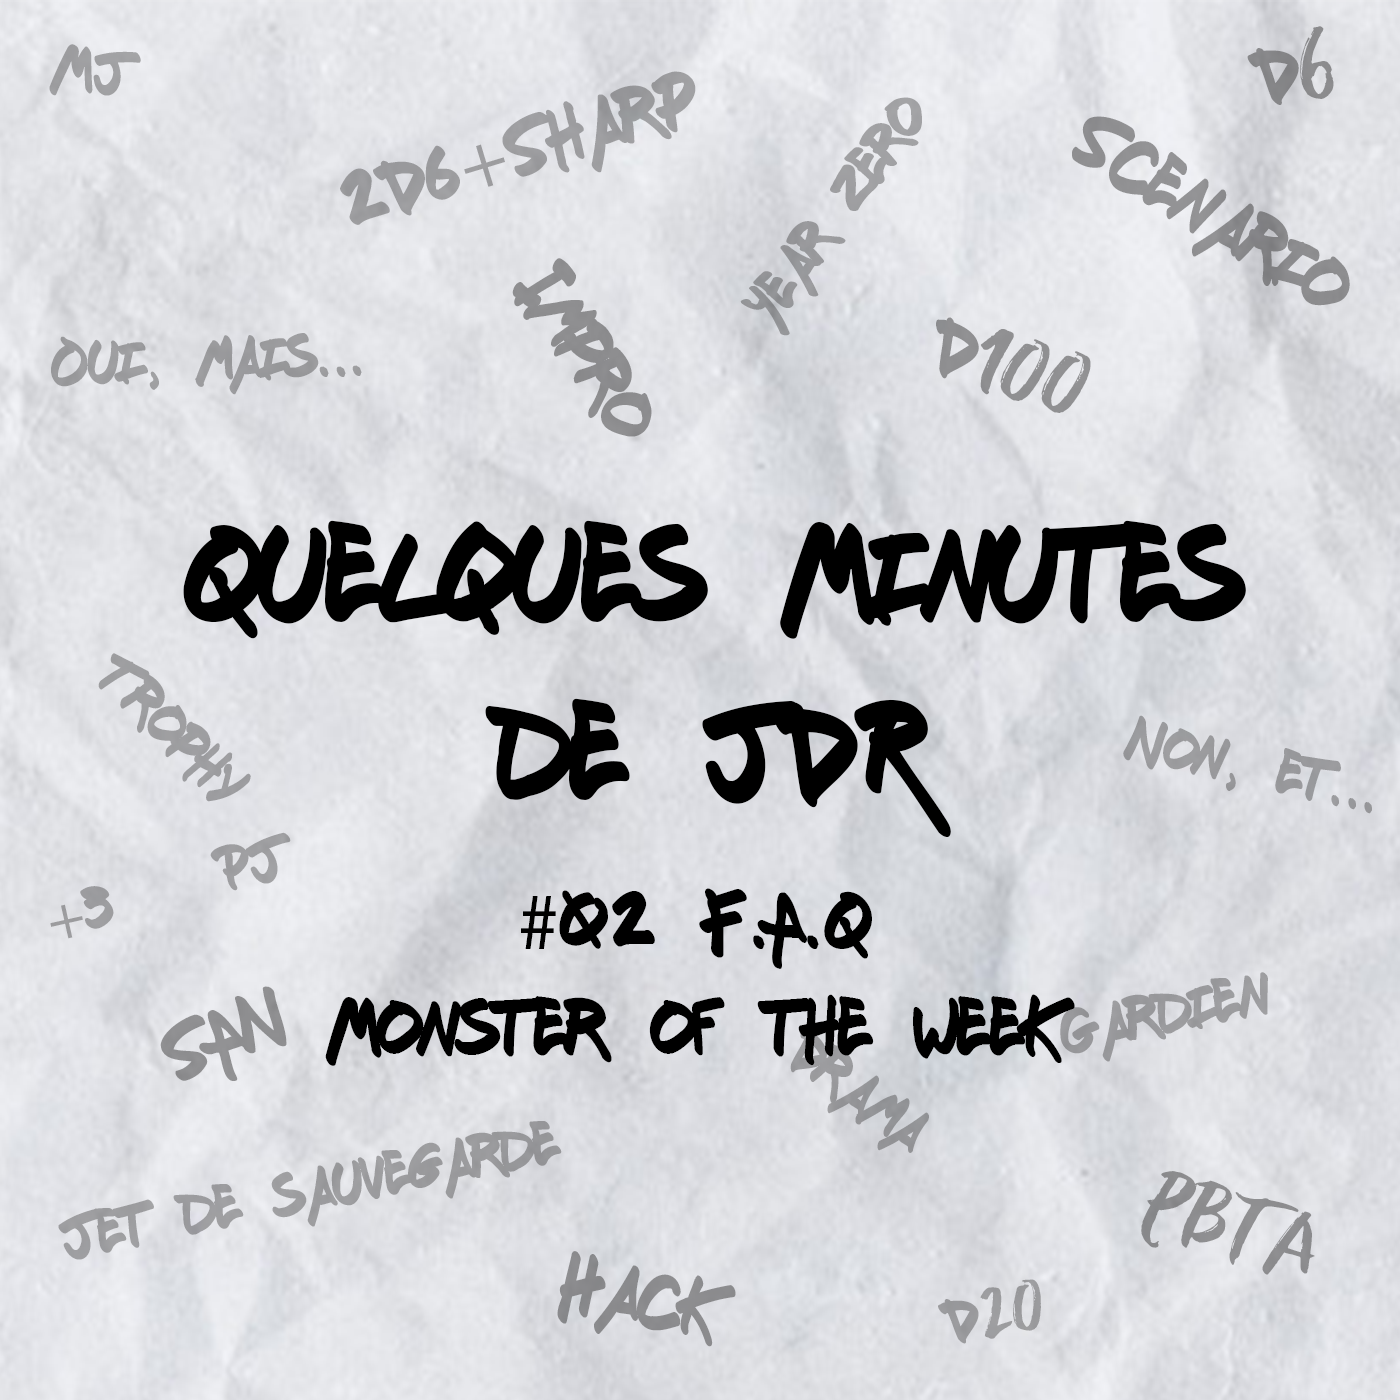 Quelques minutes de JDR – #02 FAQ Monster of the Week